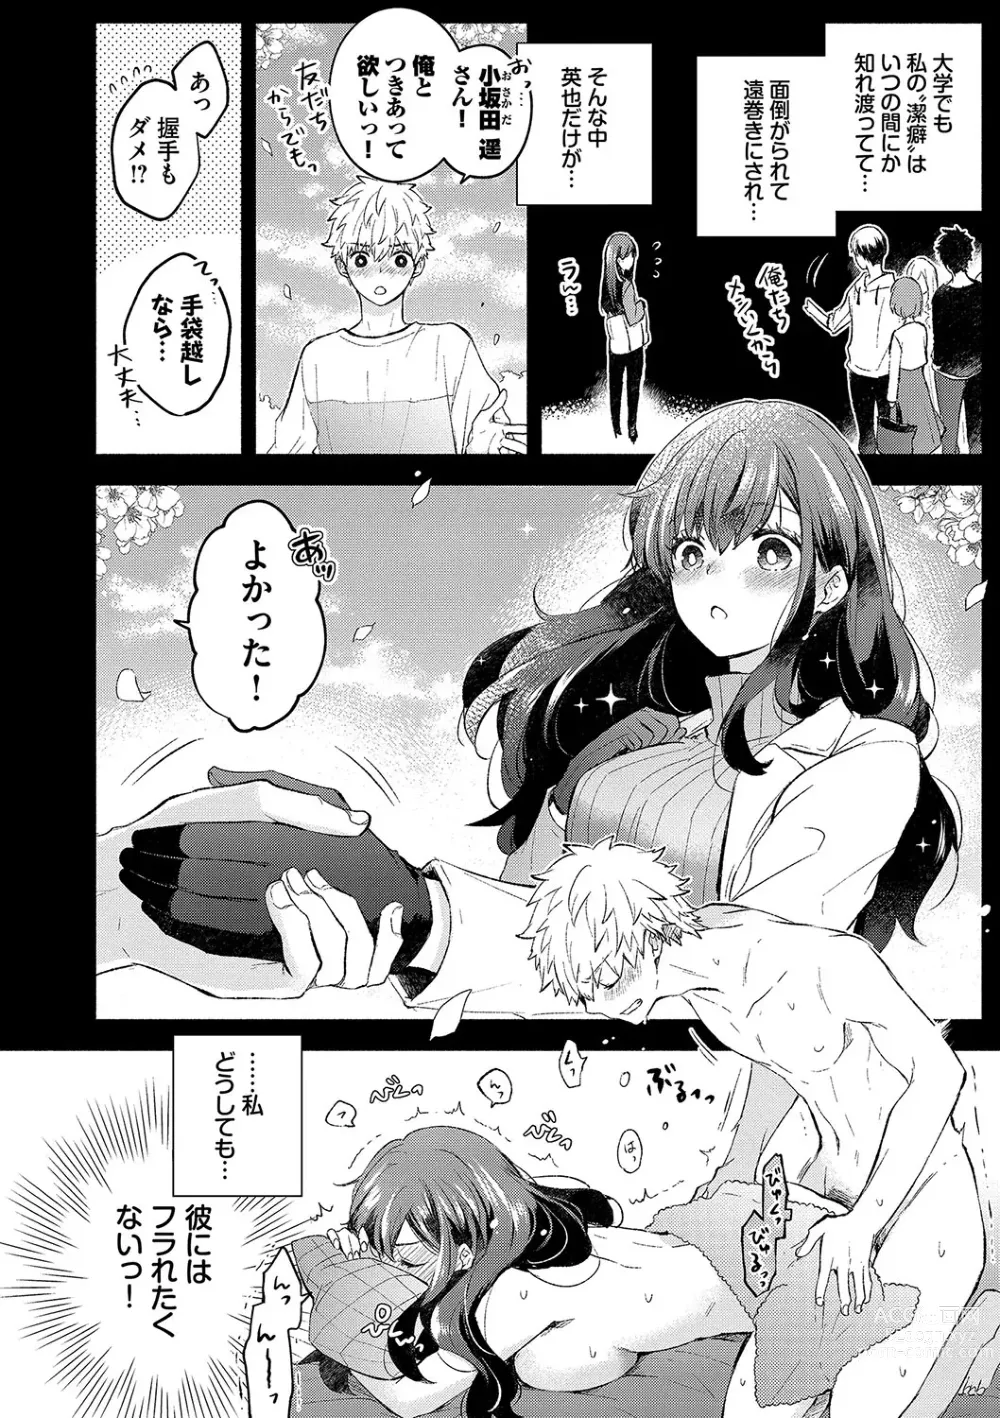 Page 7 of manga Junai Porno - Pure Love Porno